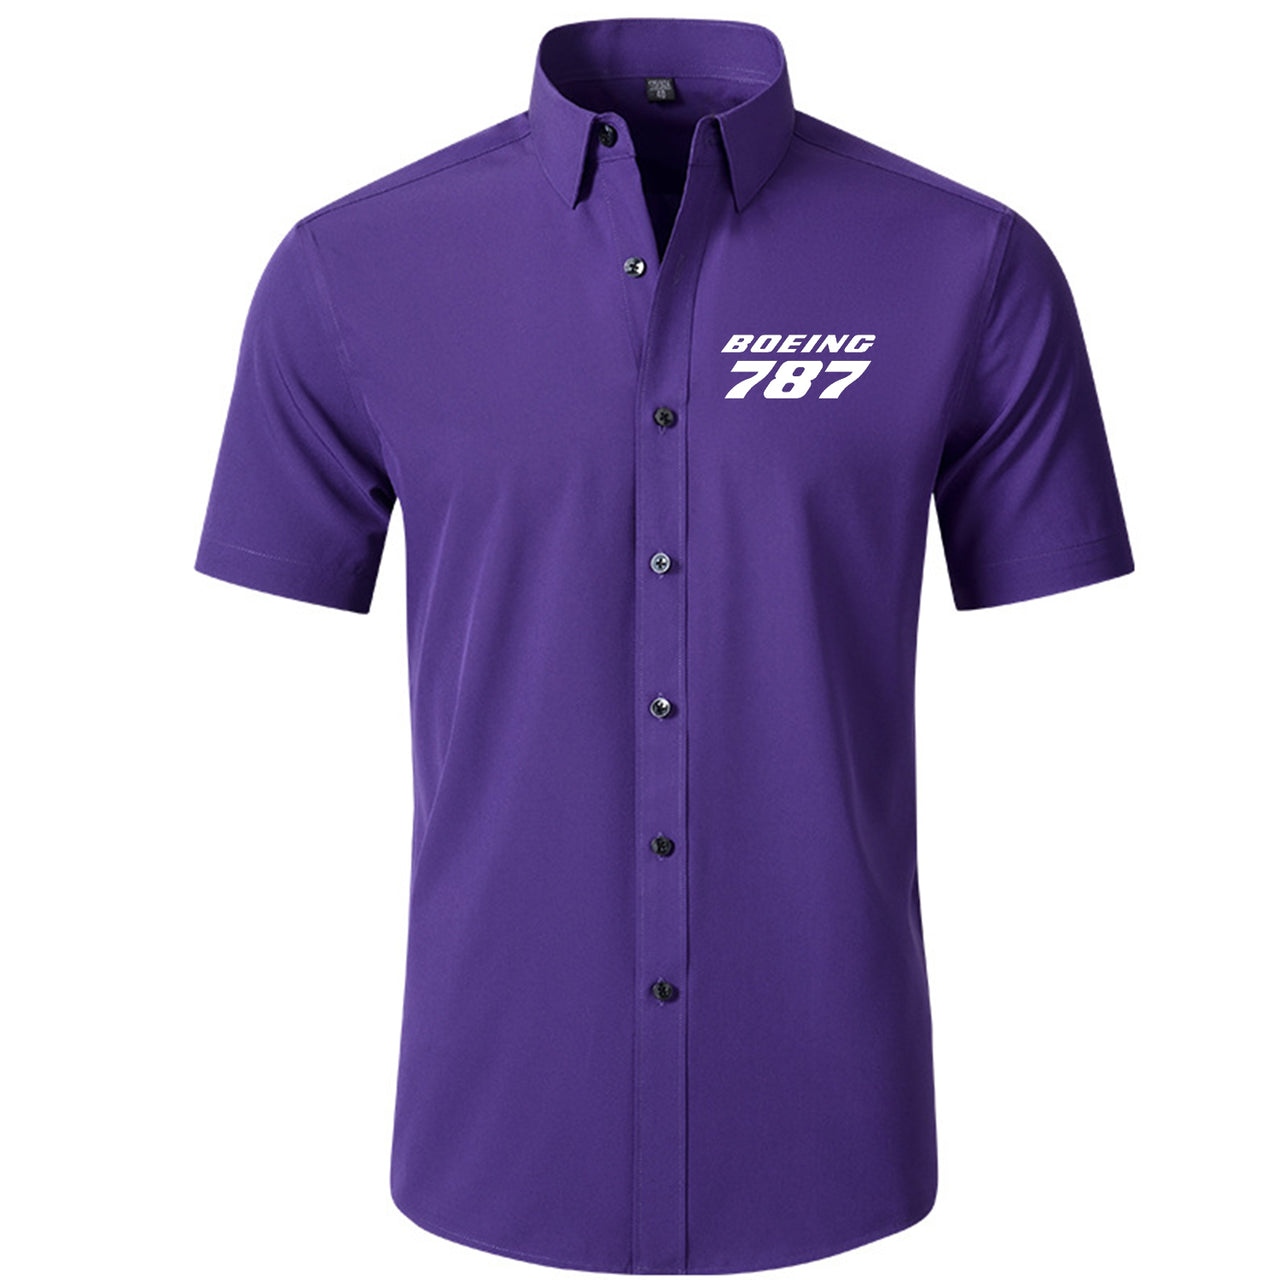 Boeing 787 & Text Designed Short Sleeve Shirts